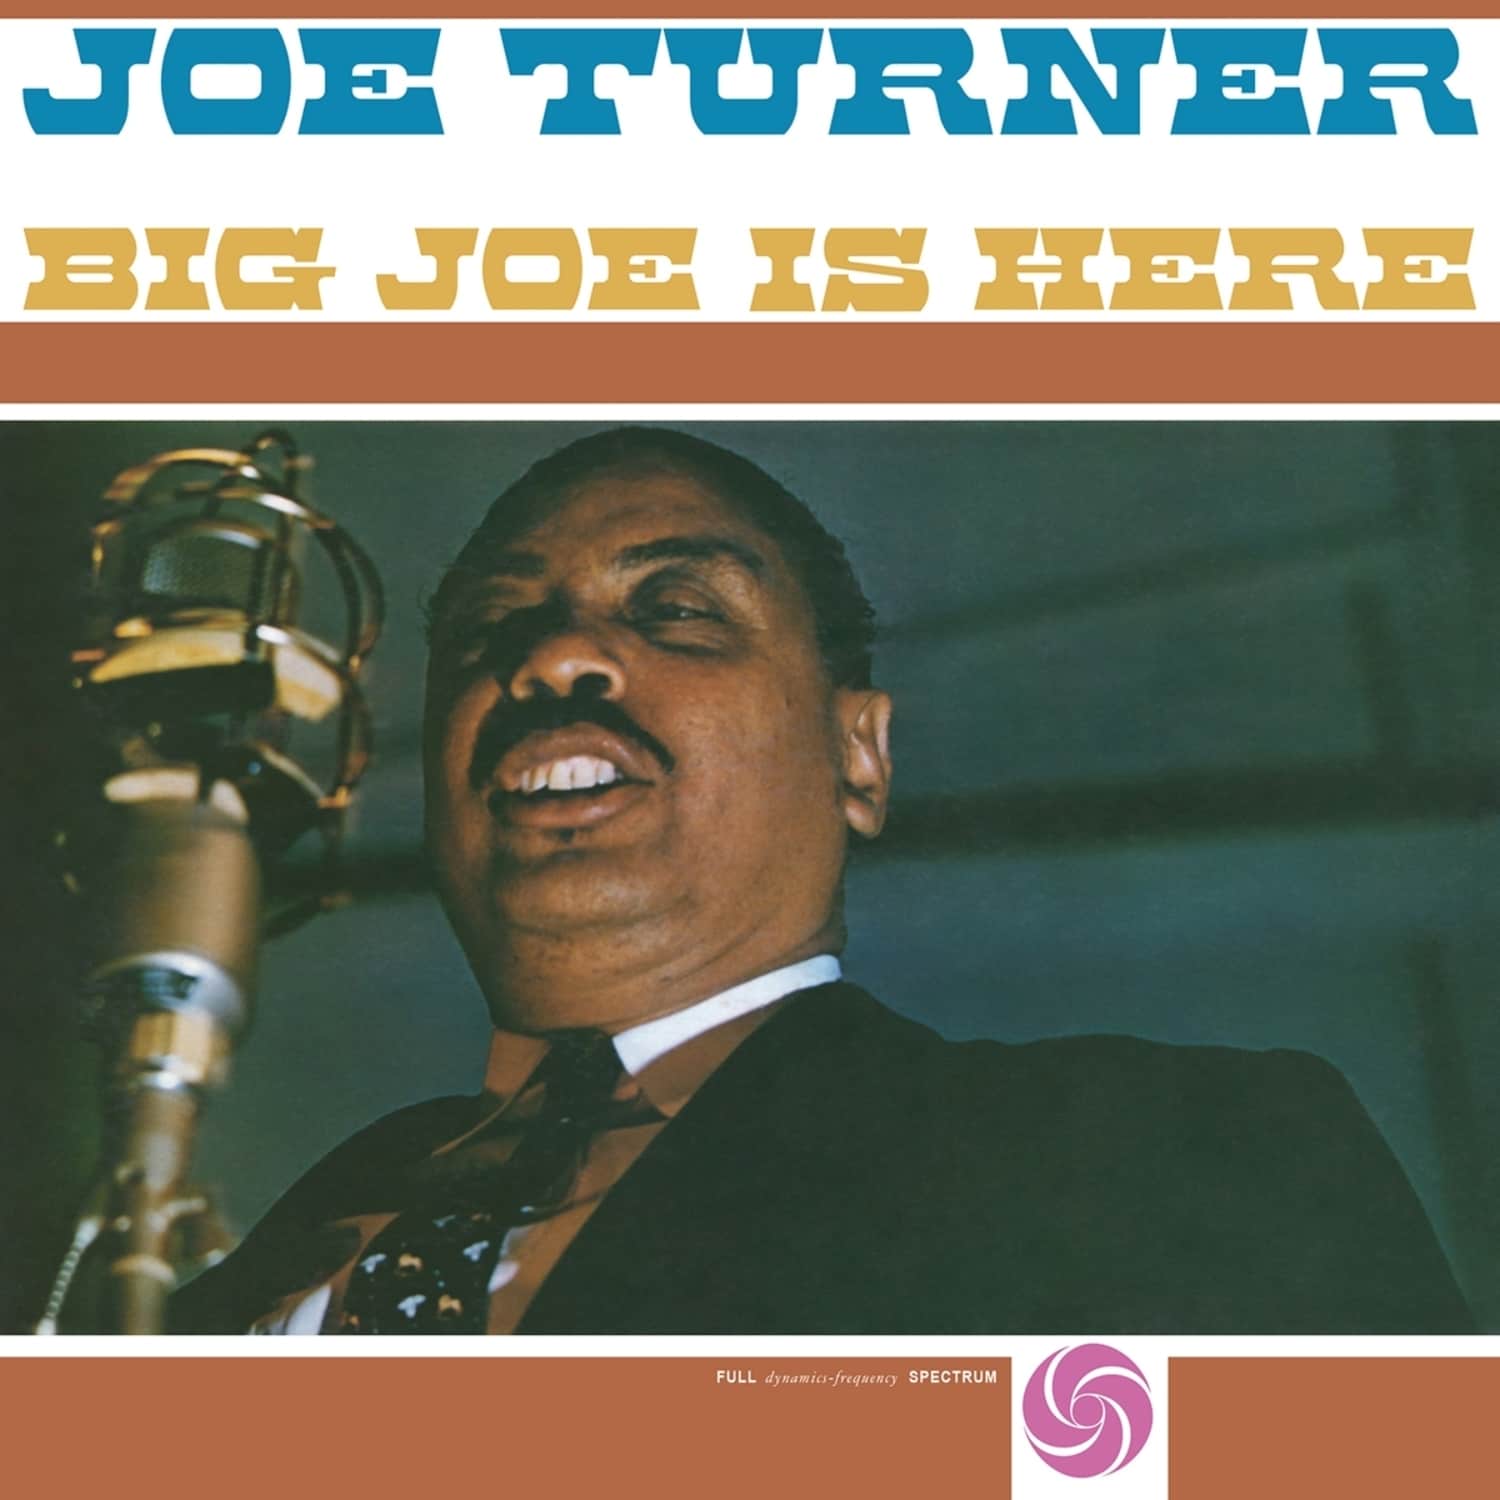 Joe Turner - BIG JOE IS HERE 